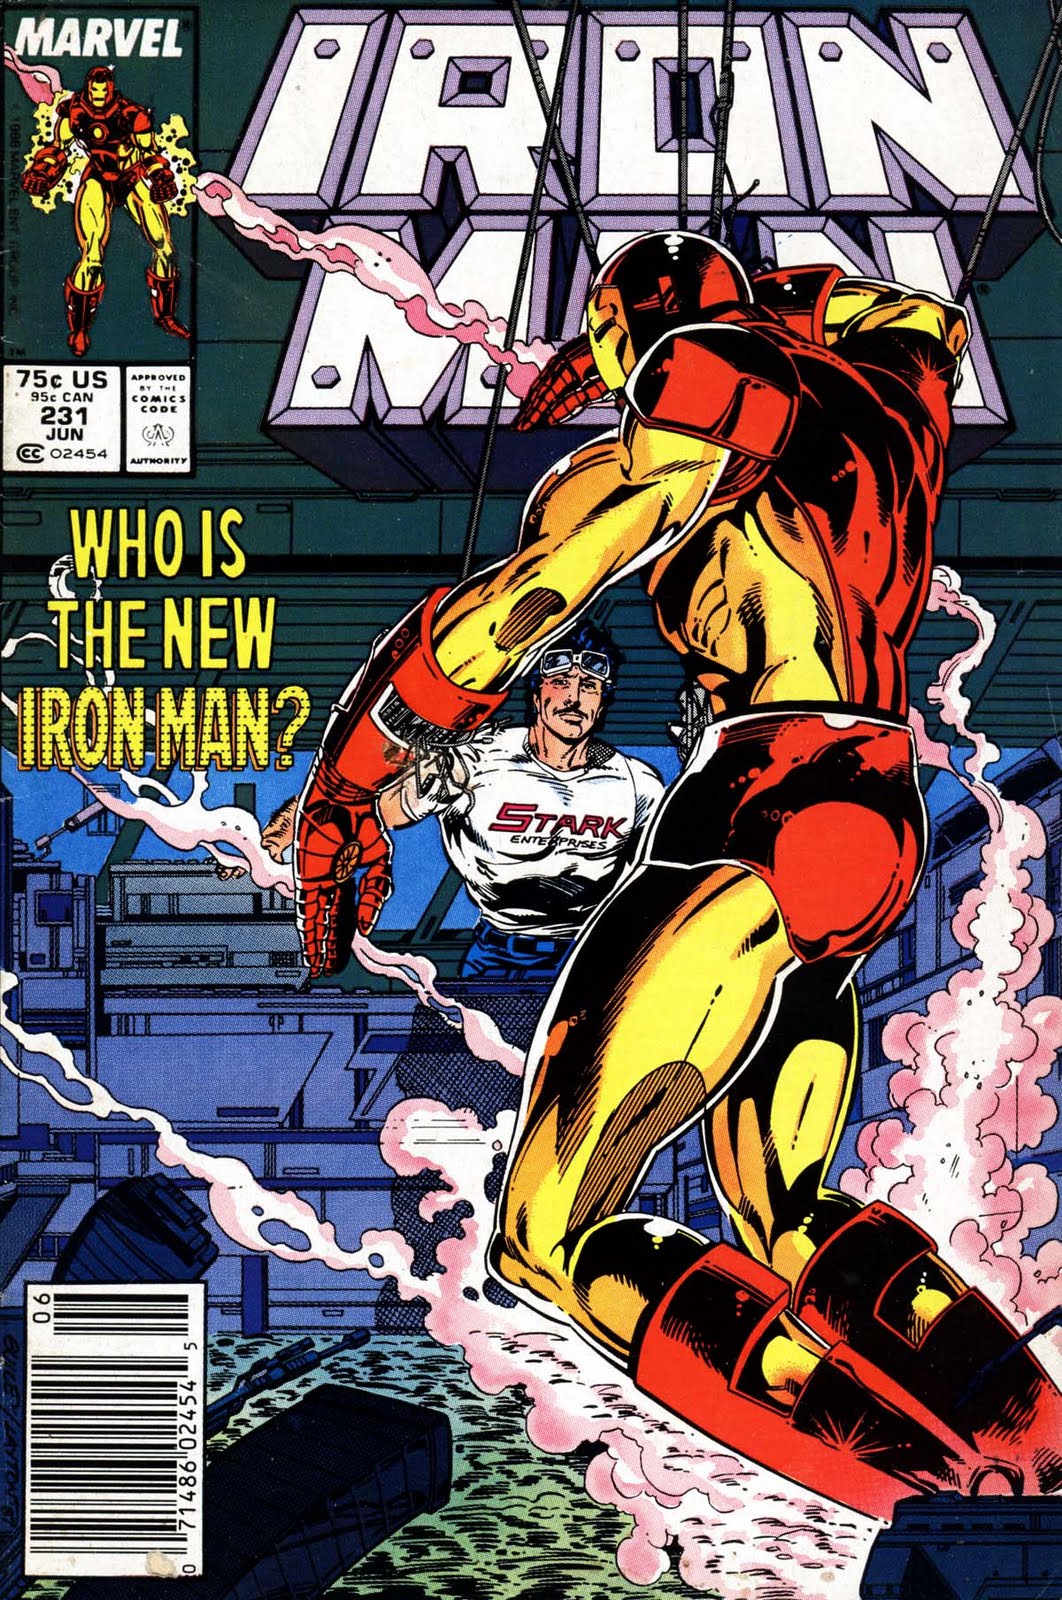 Iron man Stealth II